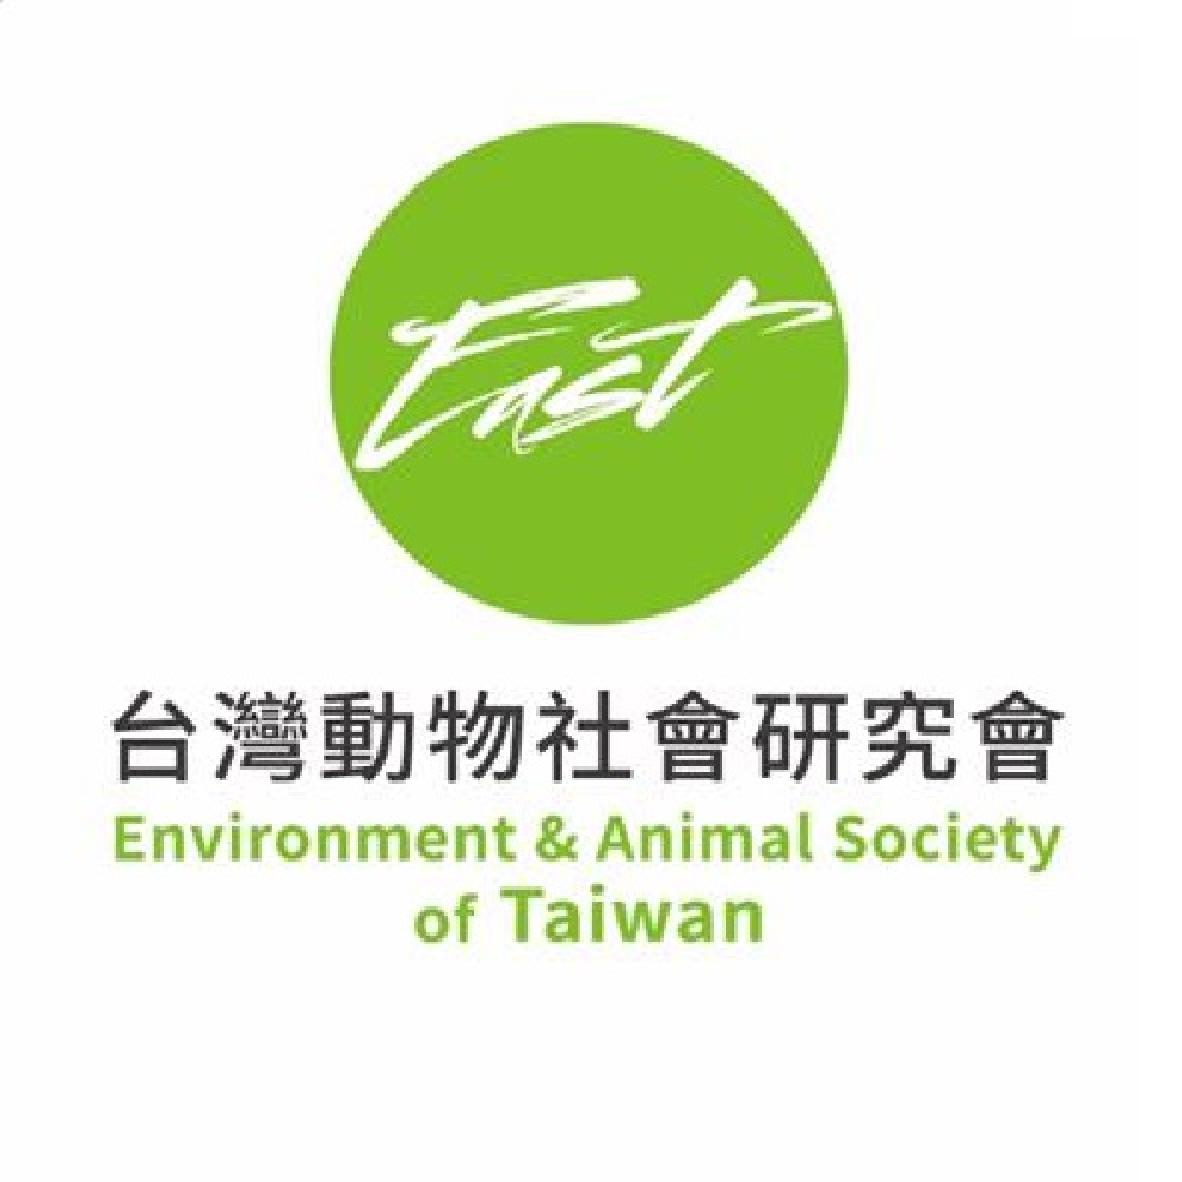 East 台灣動物社會研究會 Enviornment & Animal Society of Taiwan 及圖